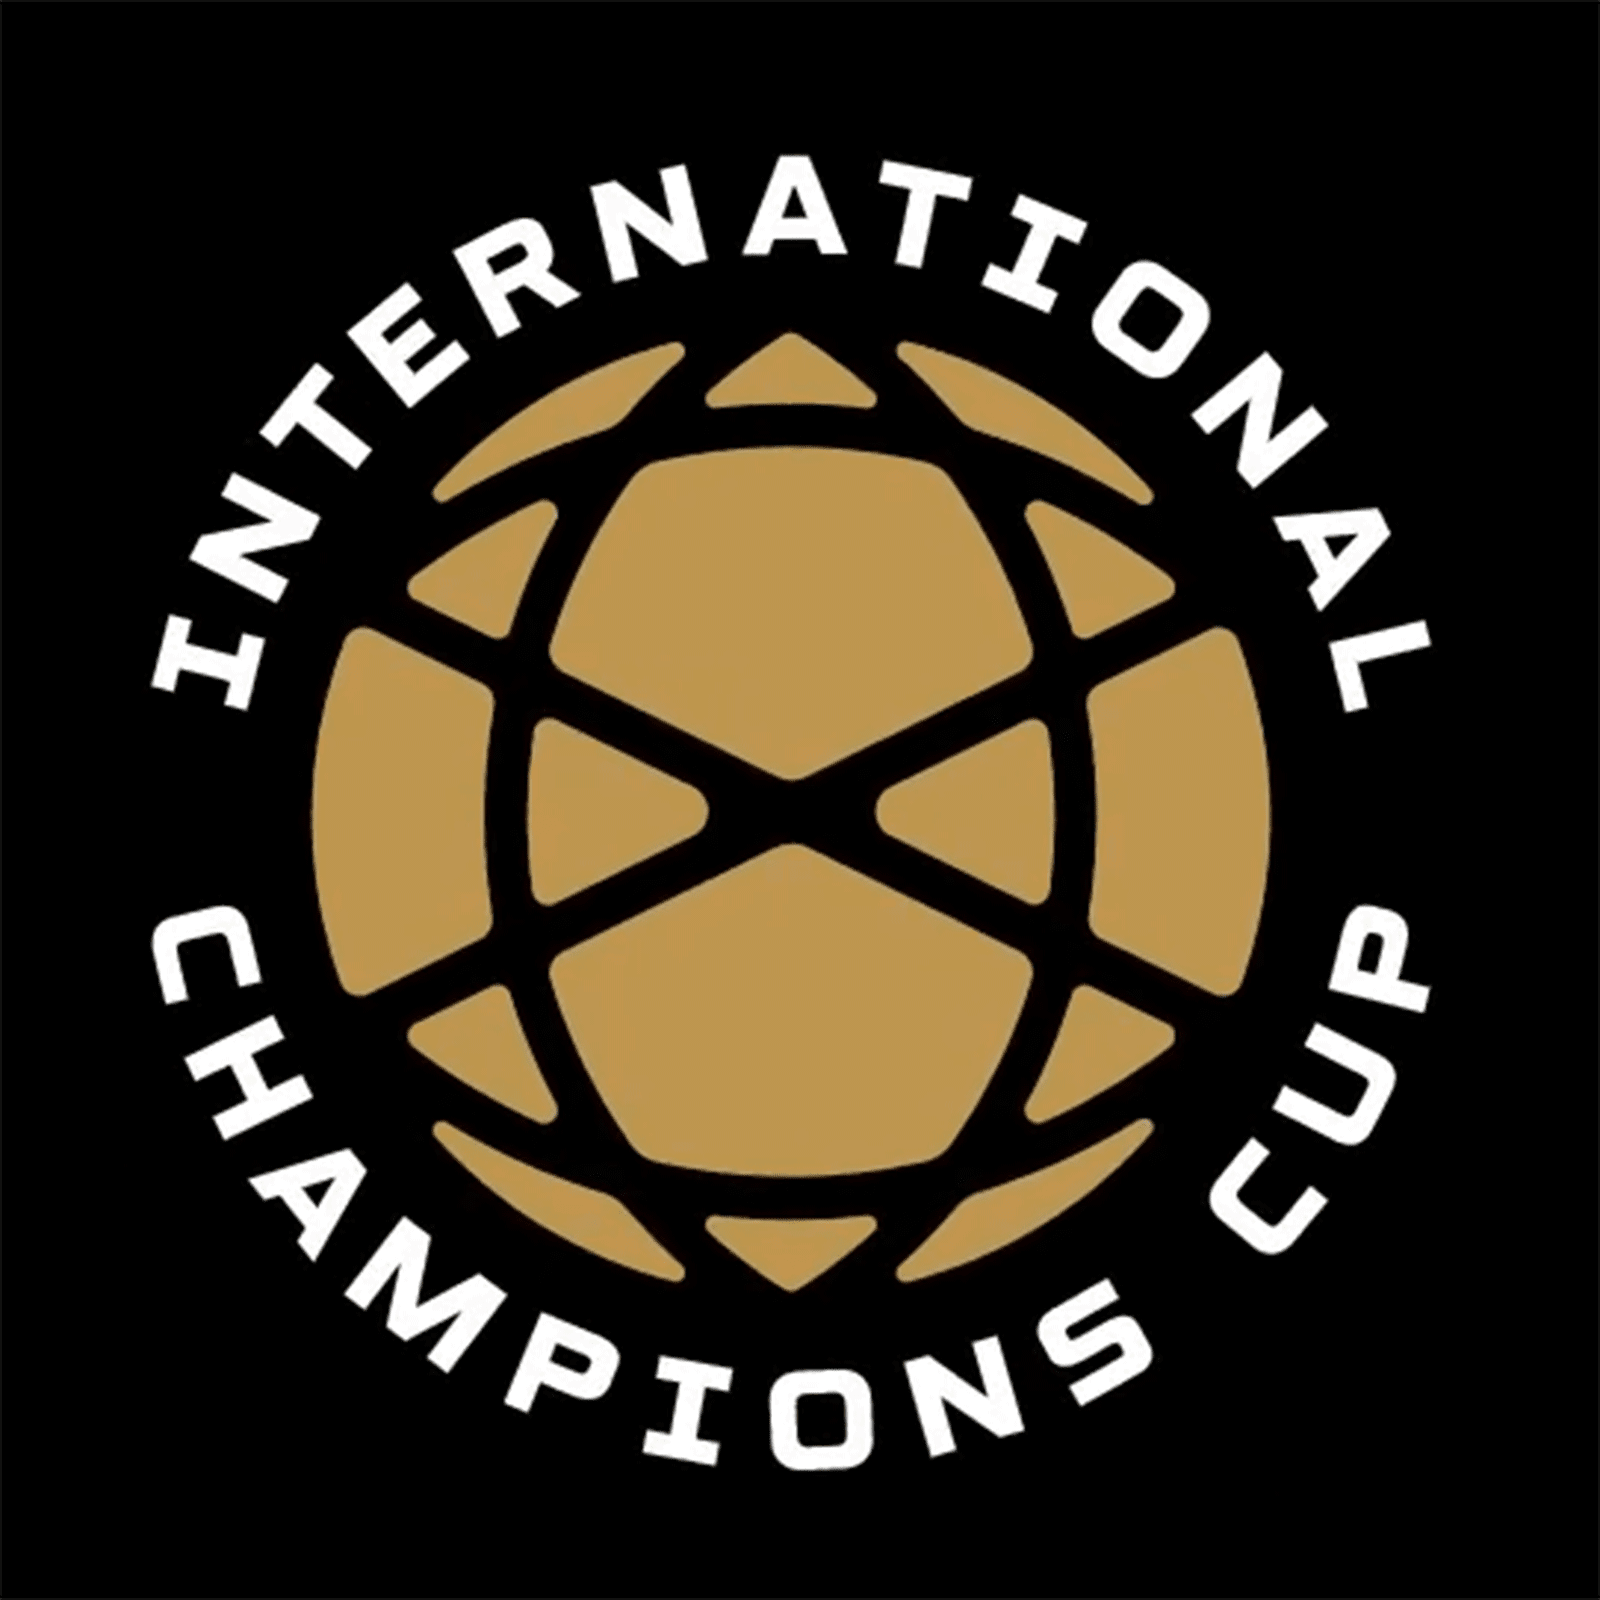 Flock naturpark Hospital All-New International Champions Cup Logo Revealed - Footy Headlines